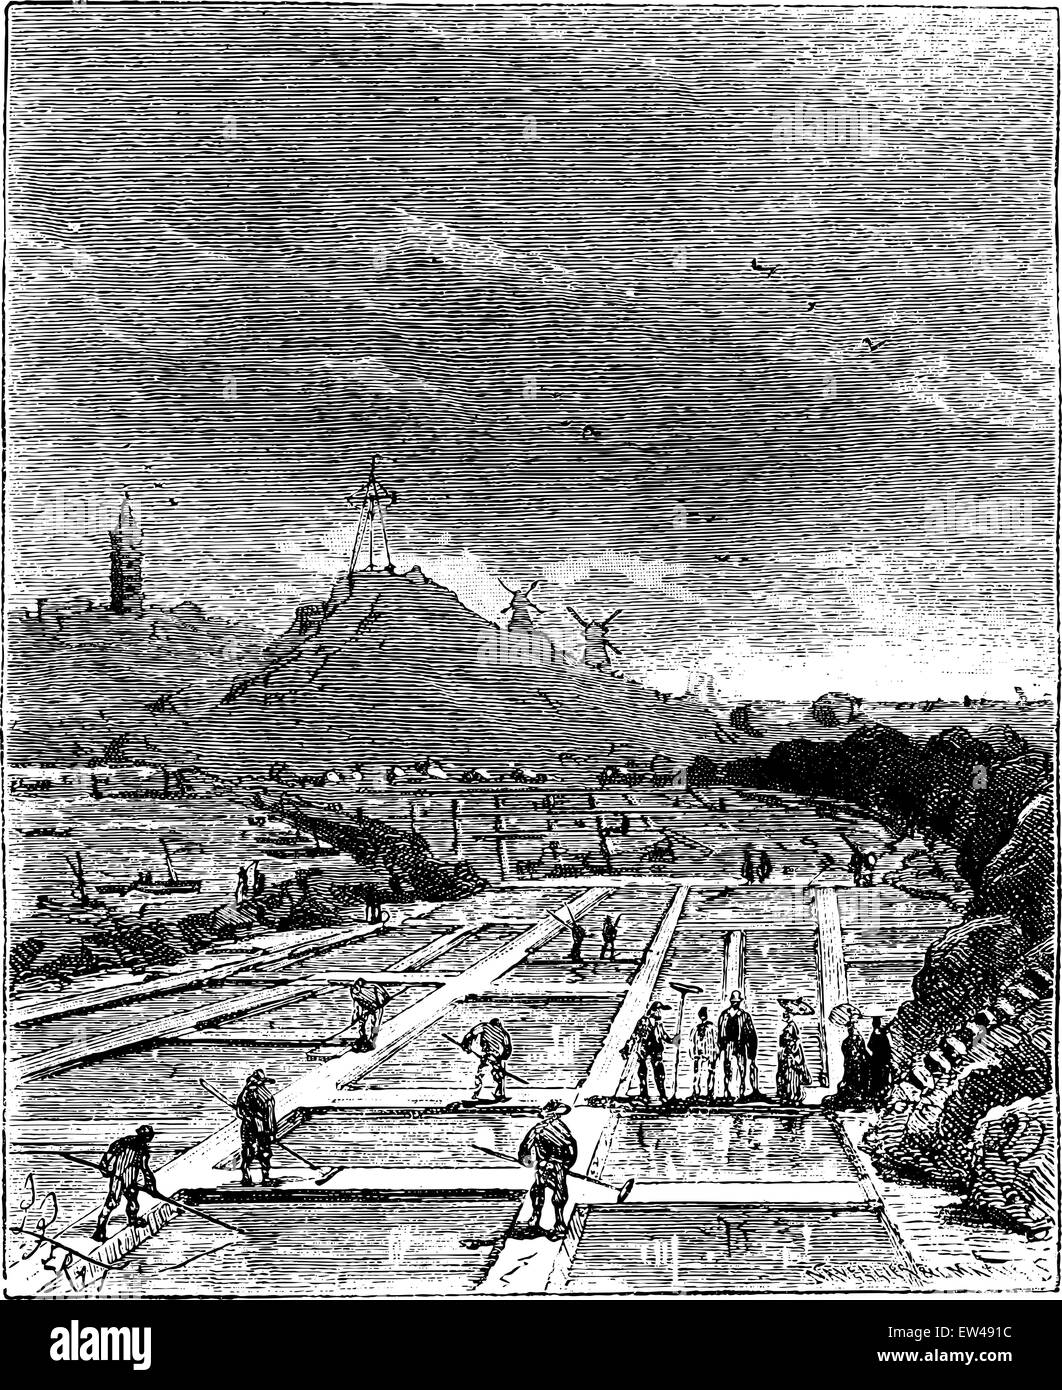 The Tour de France a small Parisian, Salt marshes, vintage engraved illustration. Journal des Voyage, Travel Journal, (1880-81). Stock Vector